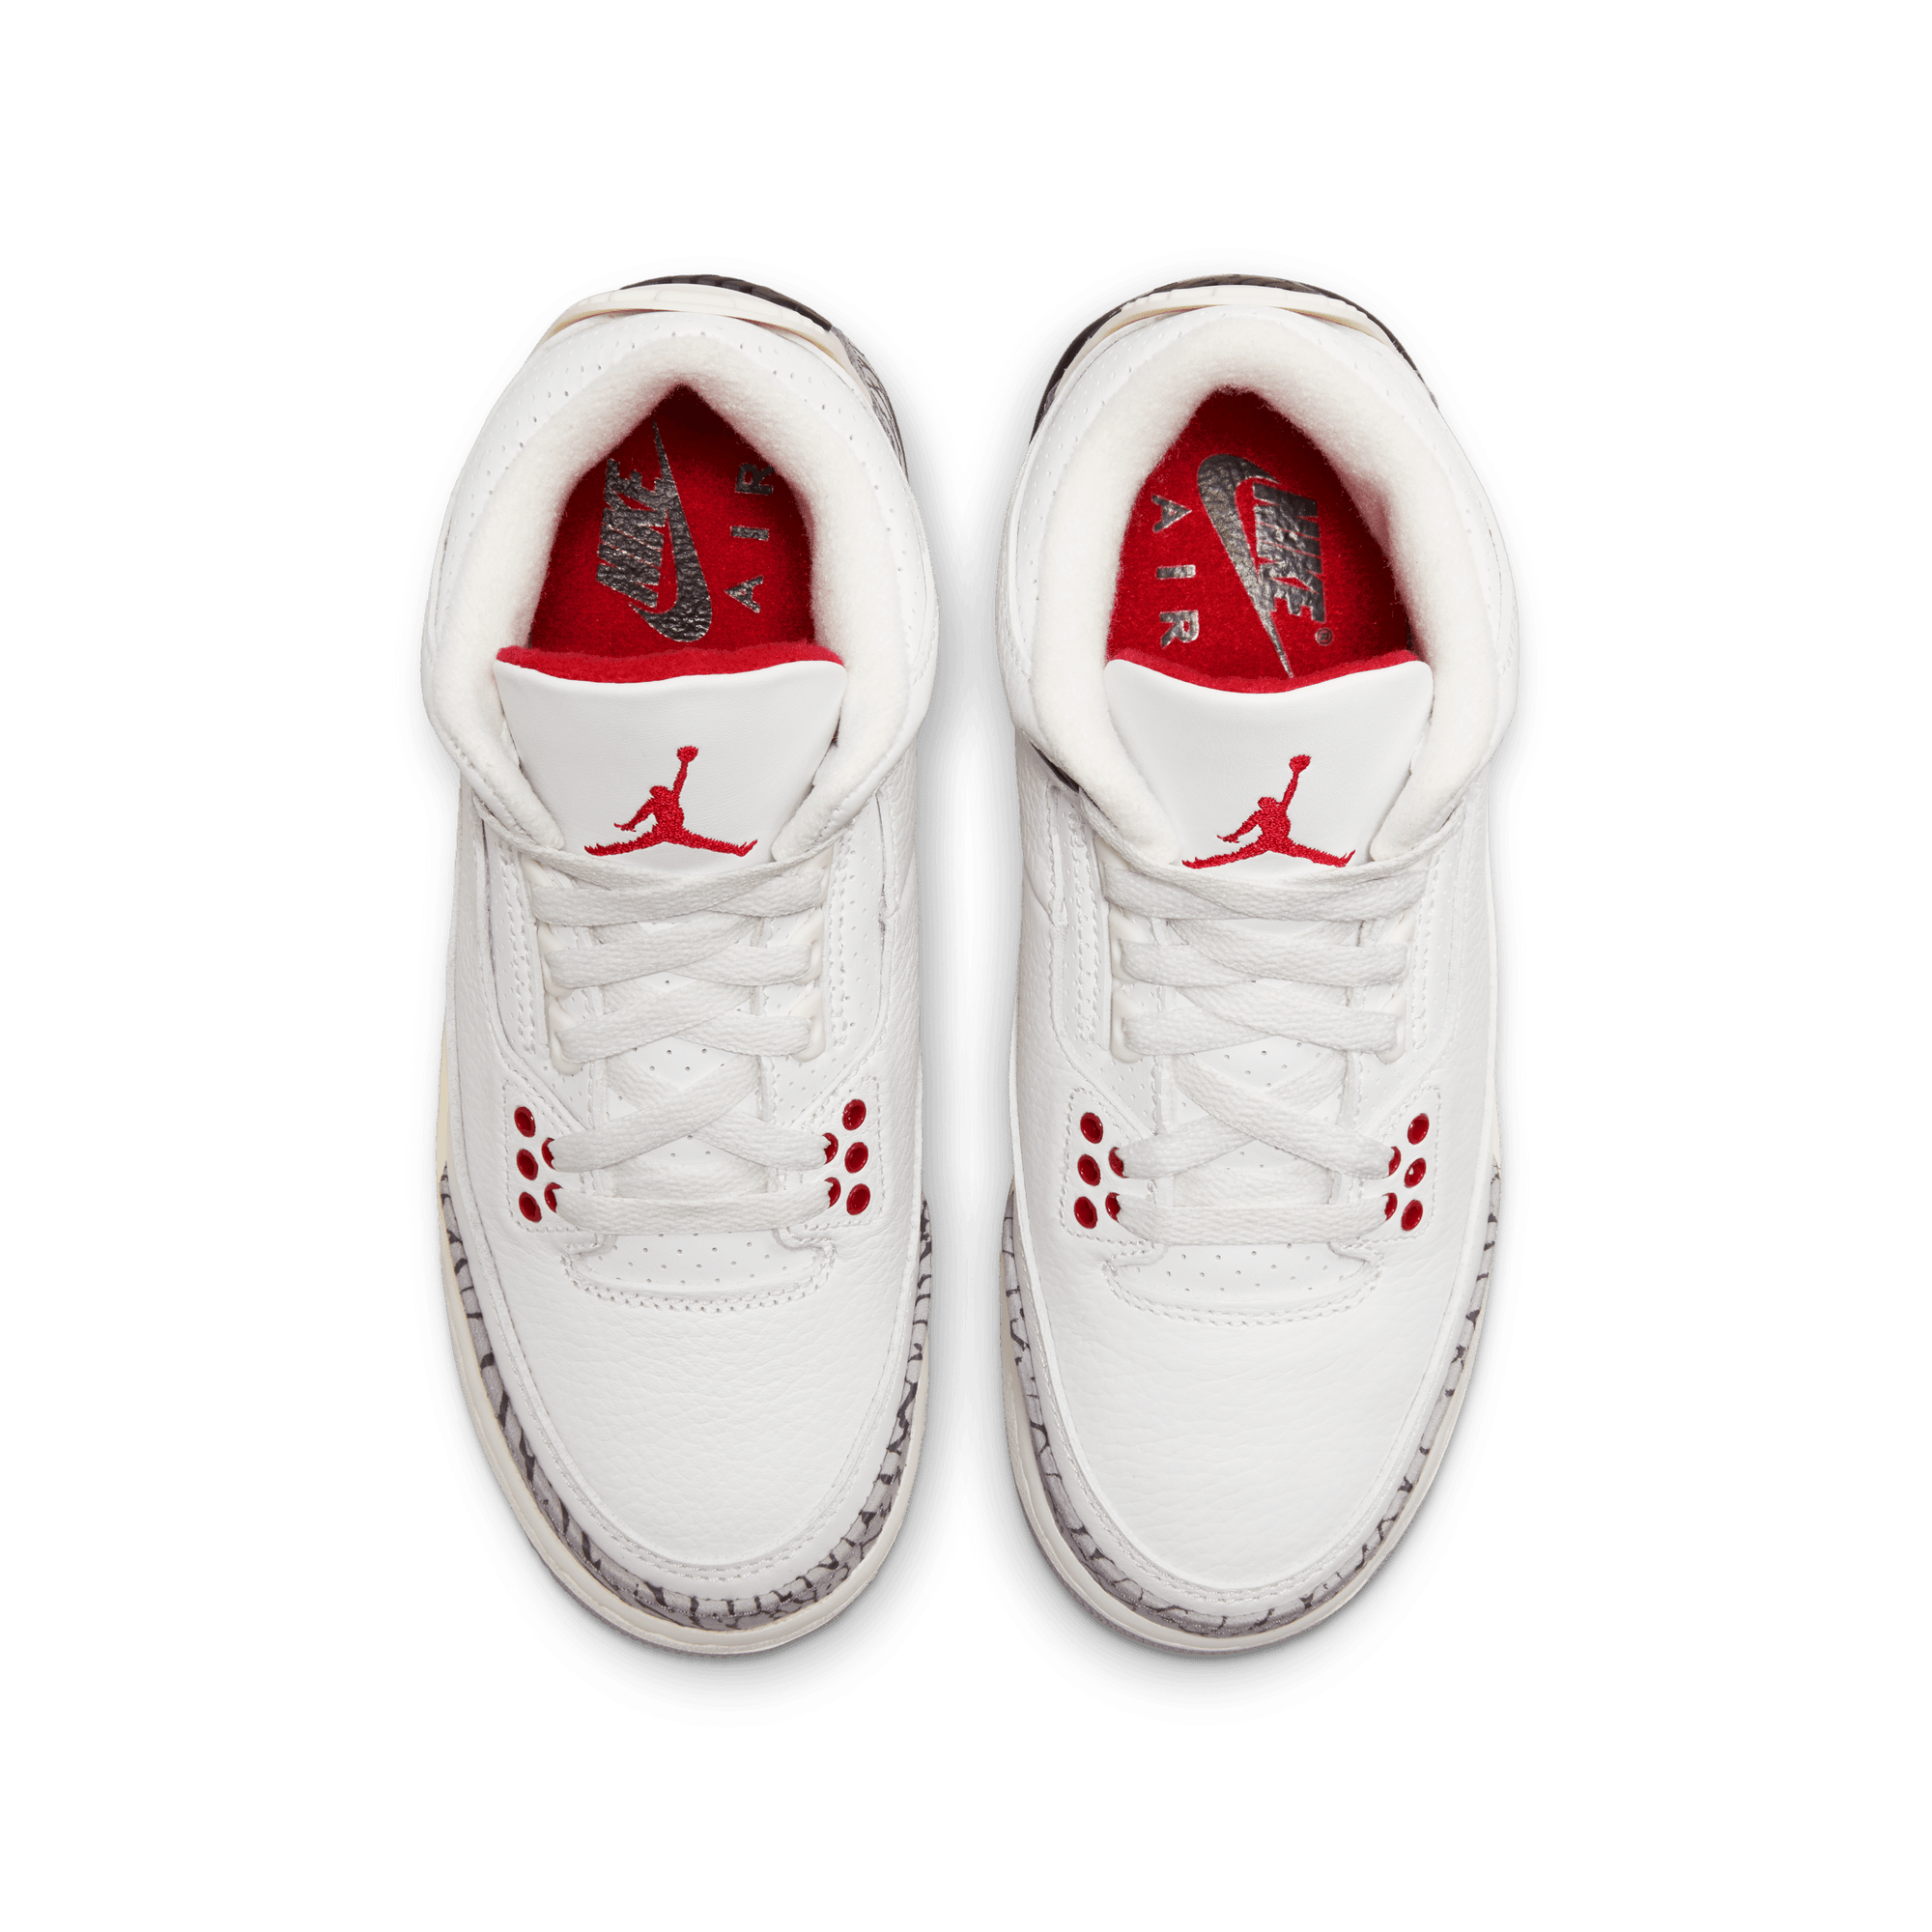 AJ Air Jordan 3 Retro - Boy's Grade School